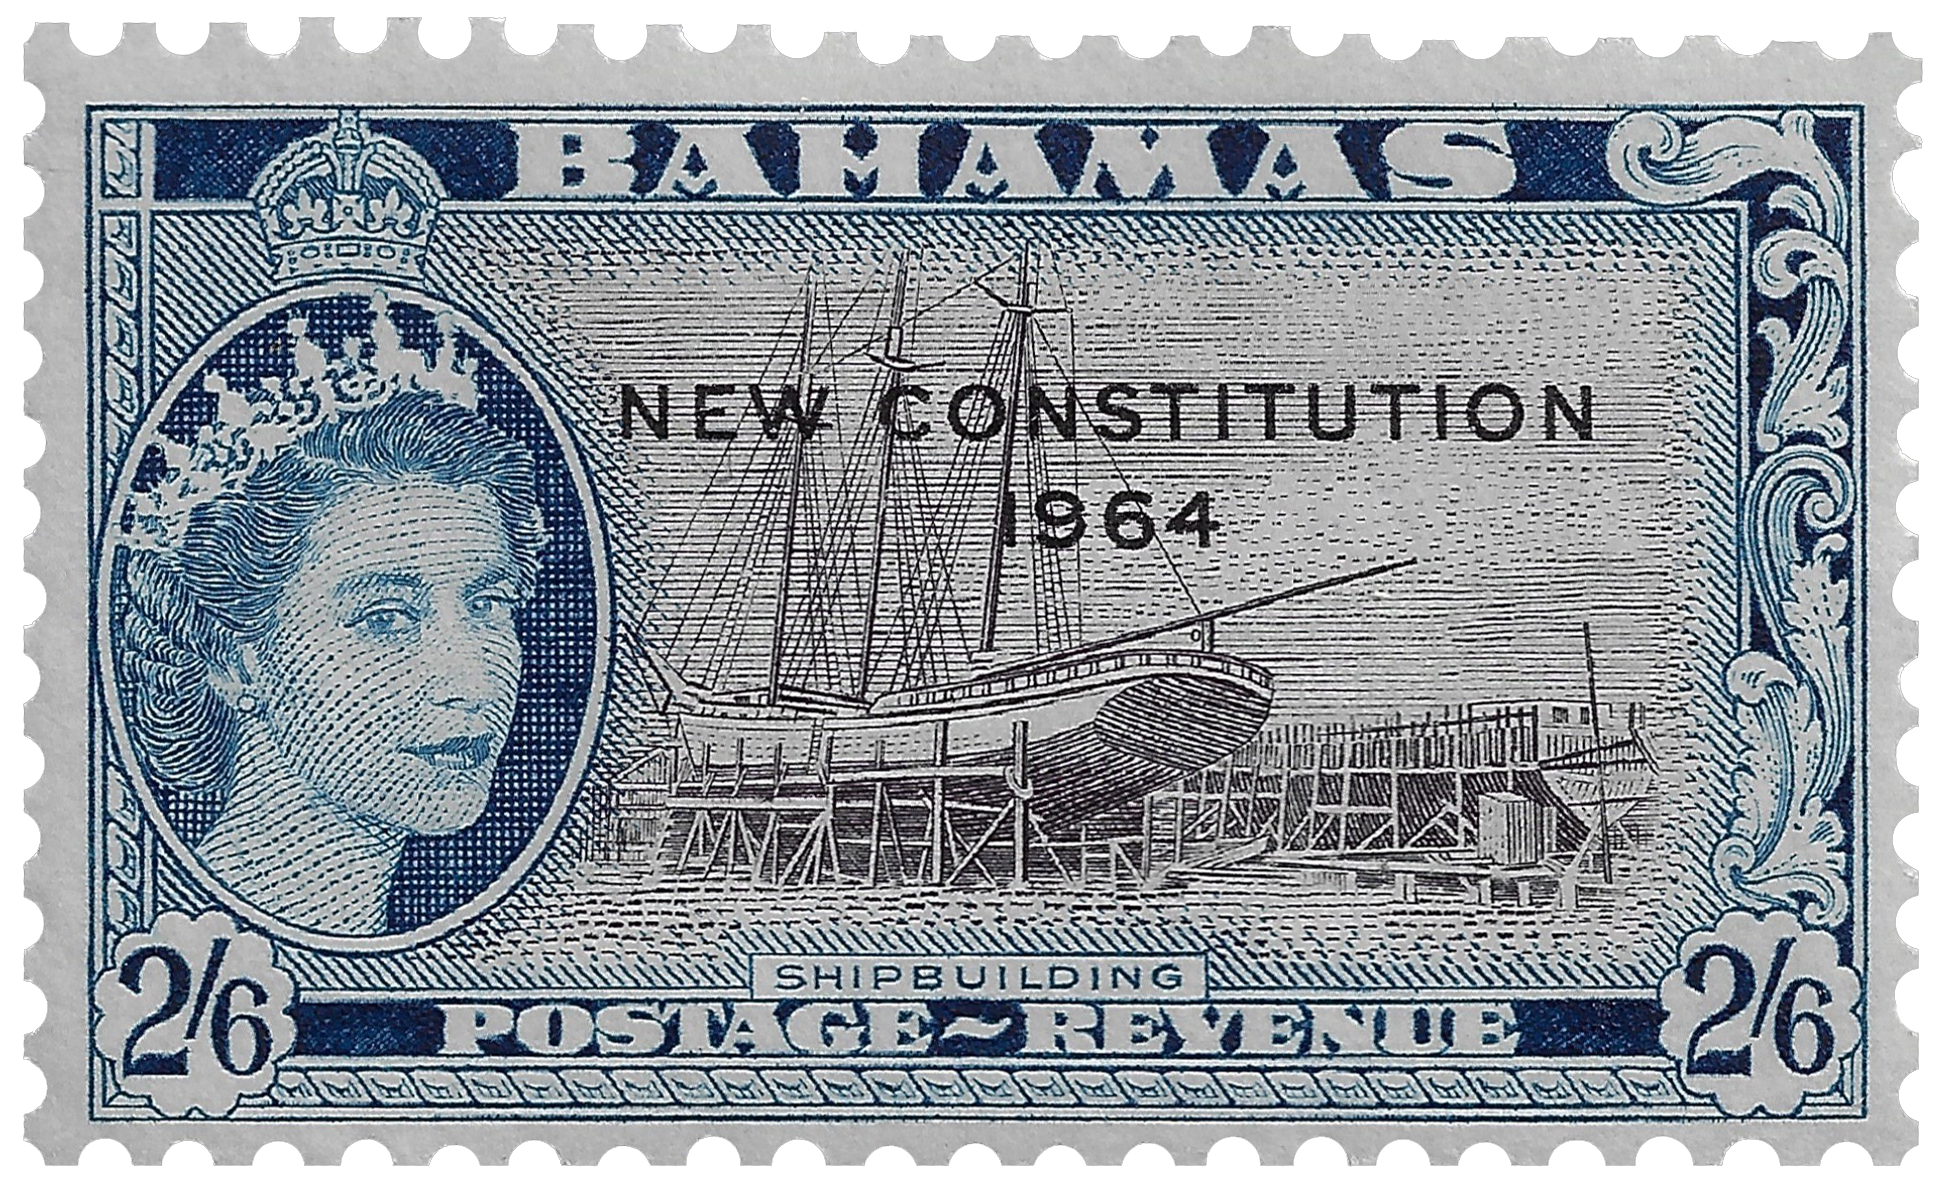 2.6s 1964, Shipbuilding, New Constitution